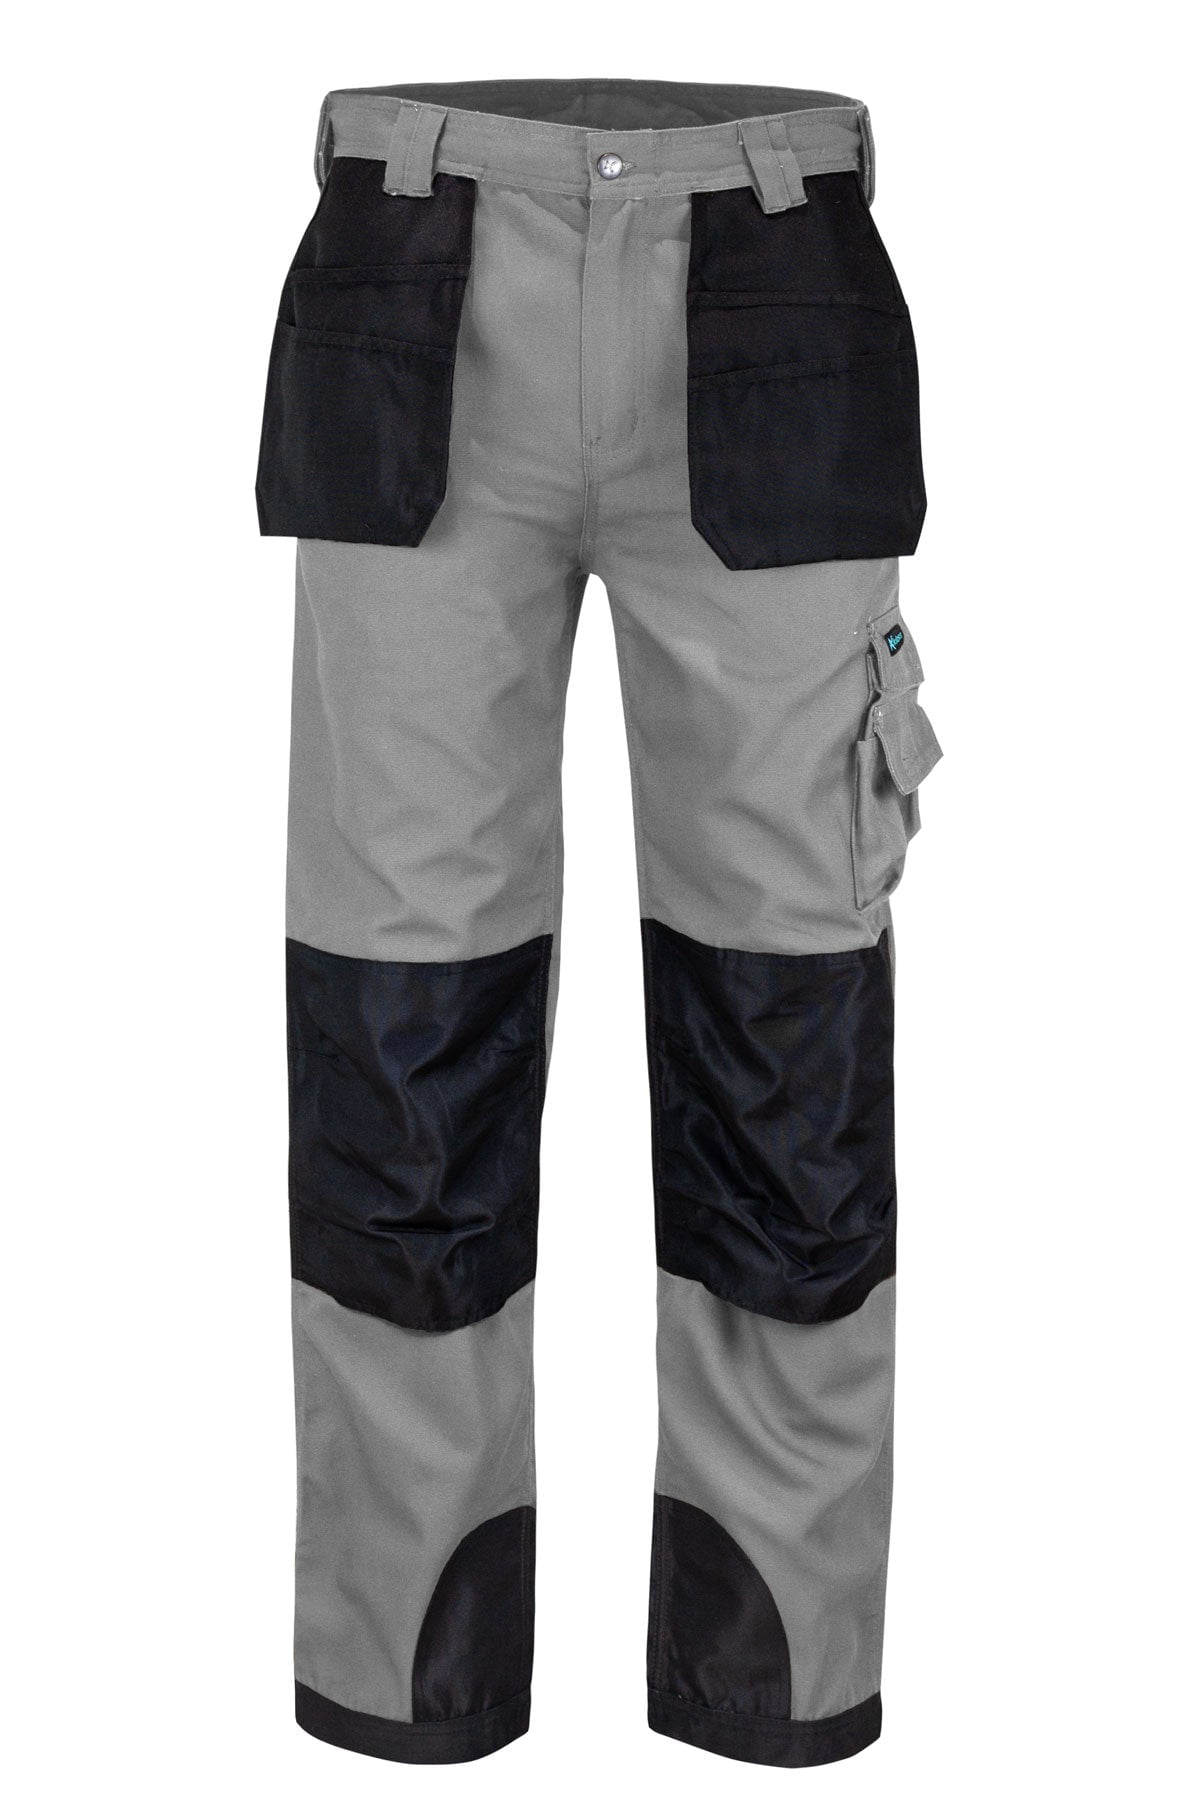 Navy Blue Work Pants Polyblend Industrial Uniform Mechanic Technician Brand NEW 